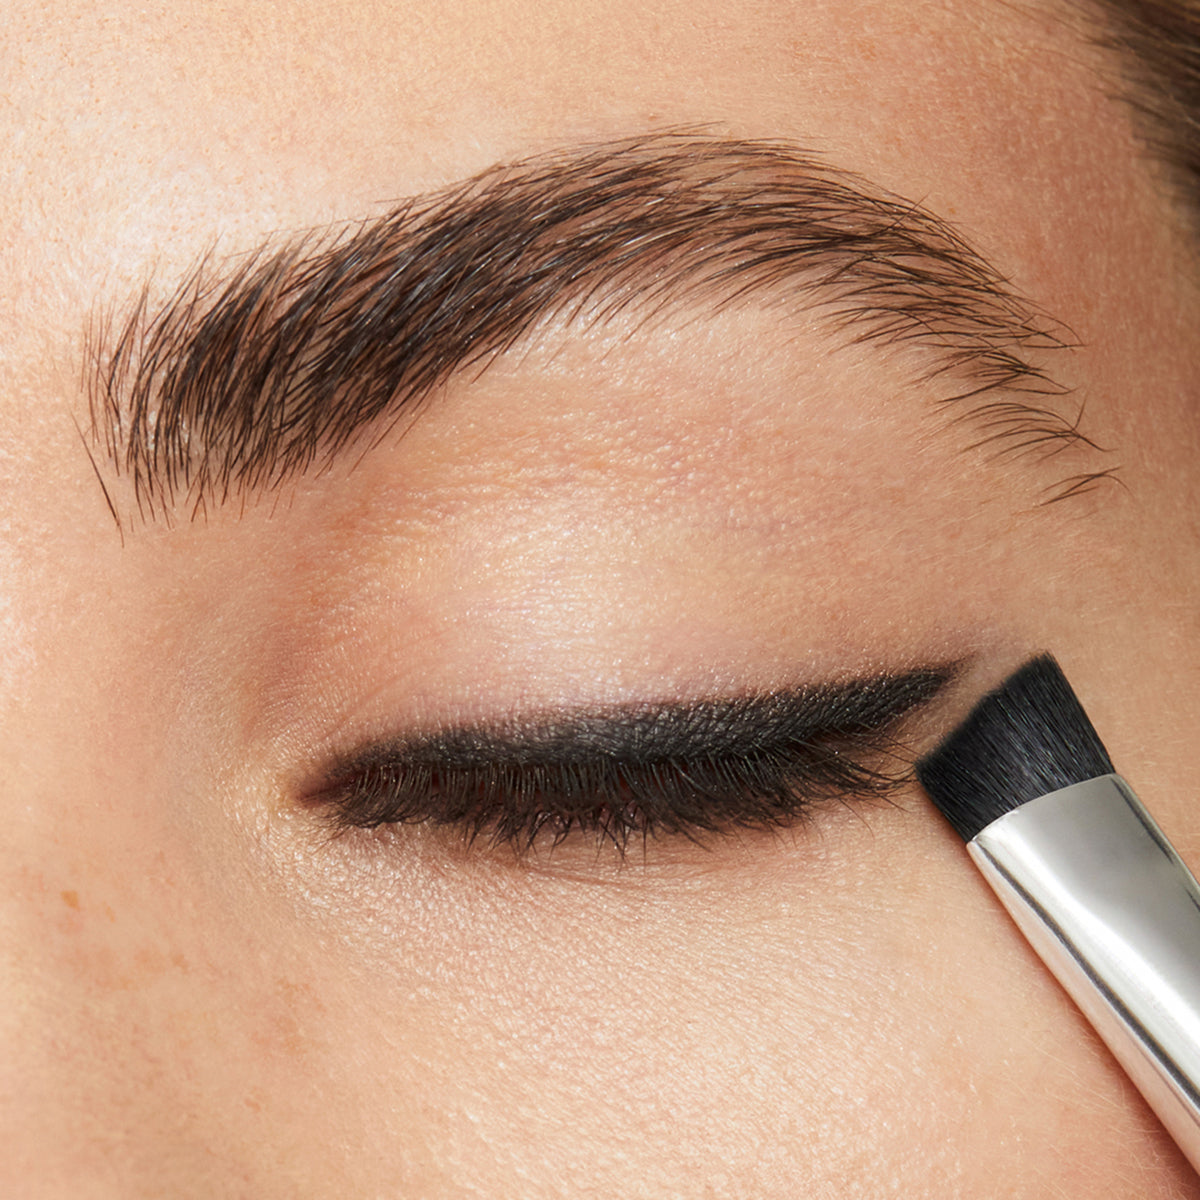 Model applying Licorice eye shadow as a eyeliner